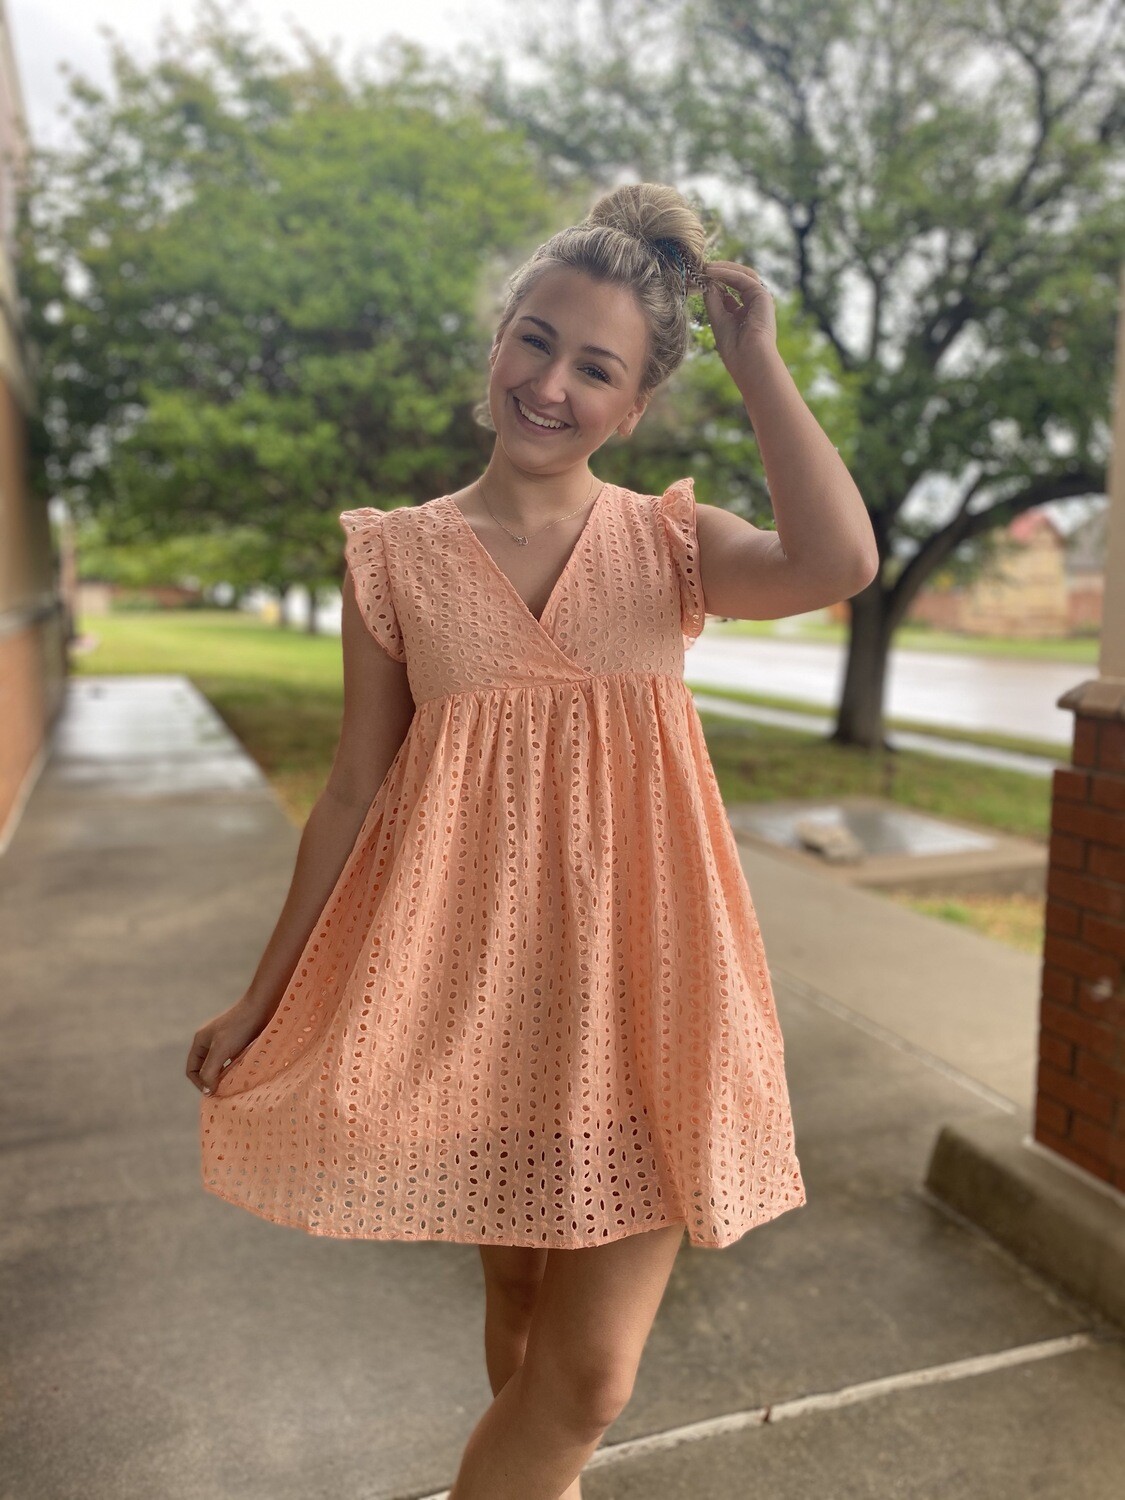 Georgia Peach Dress.